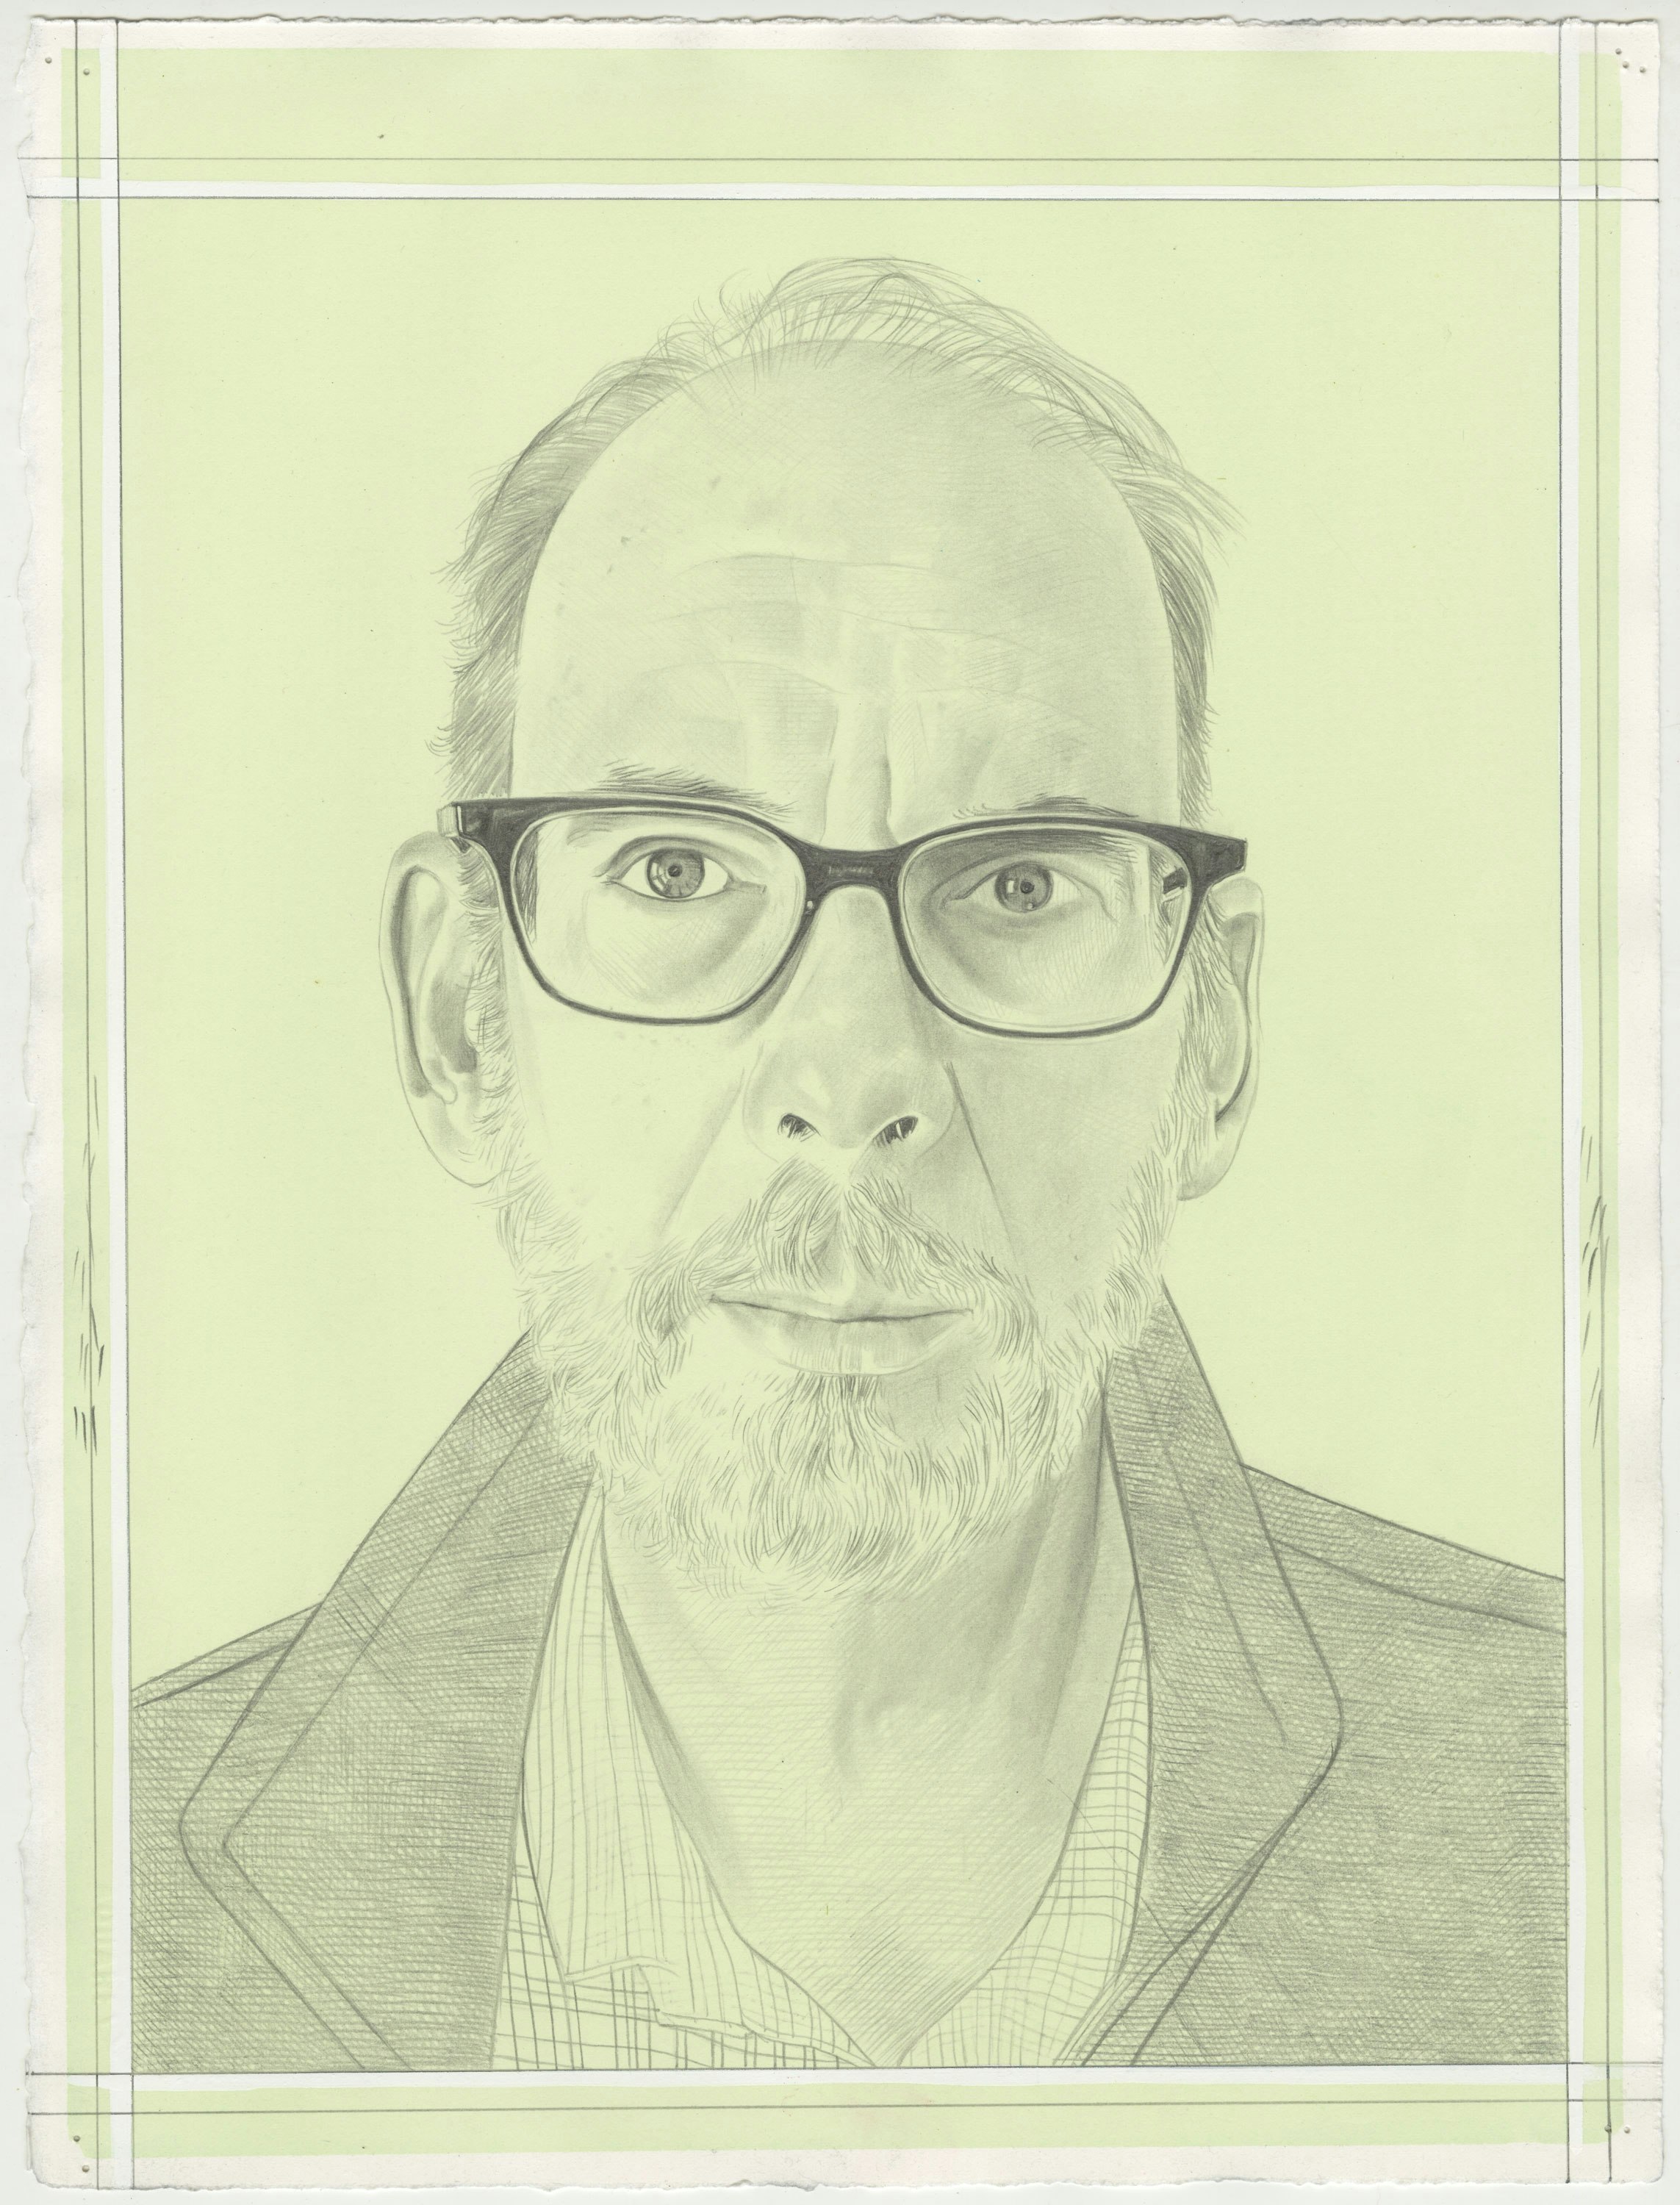 Portrait of Tom McGlynn, pencil on paper by Phong H. Bui. Based on a photo by  Maya McGlynn.